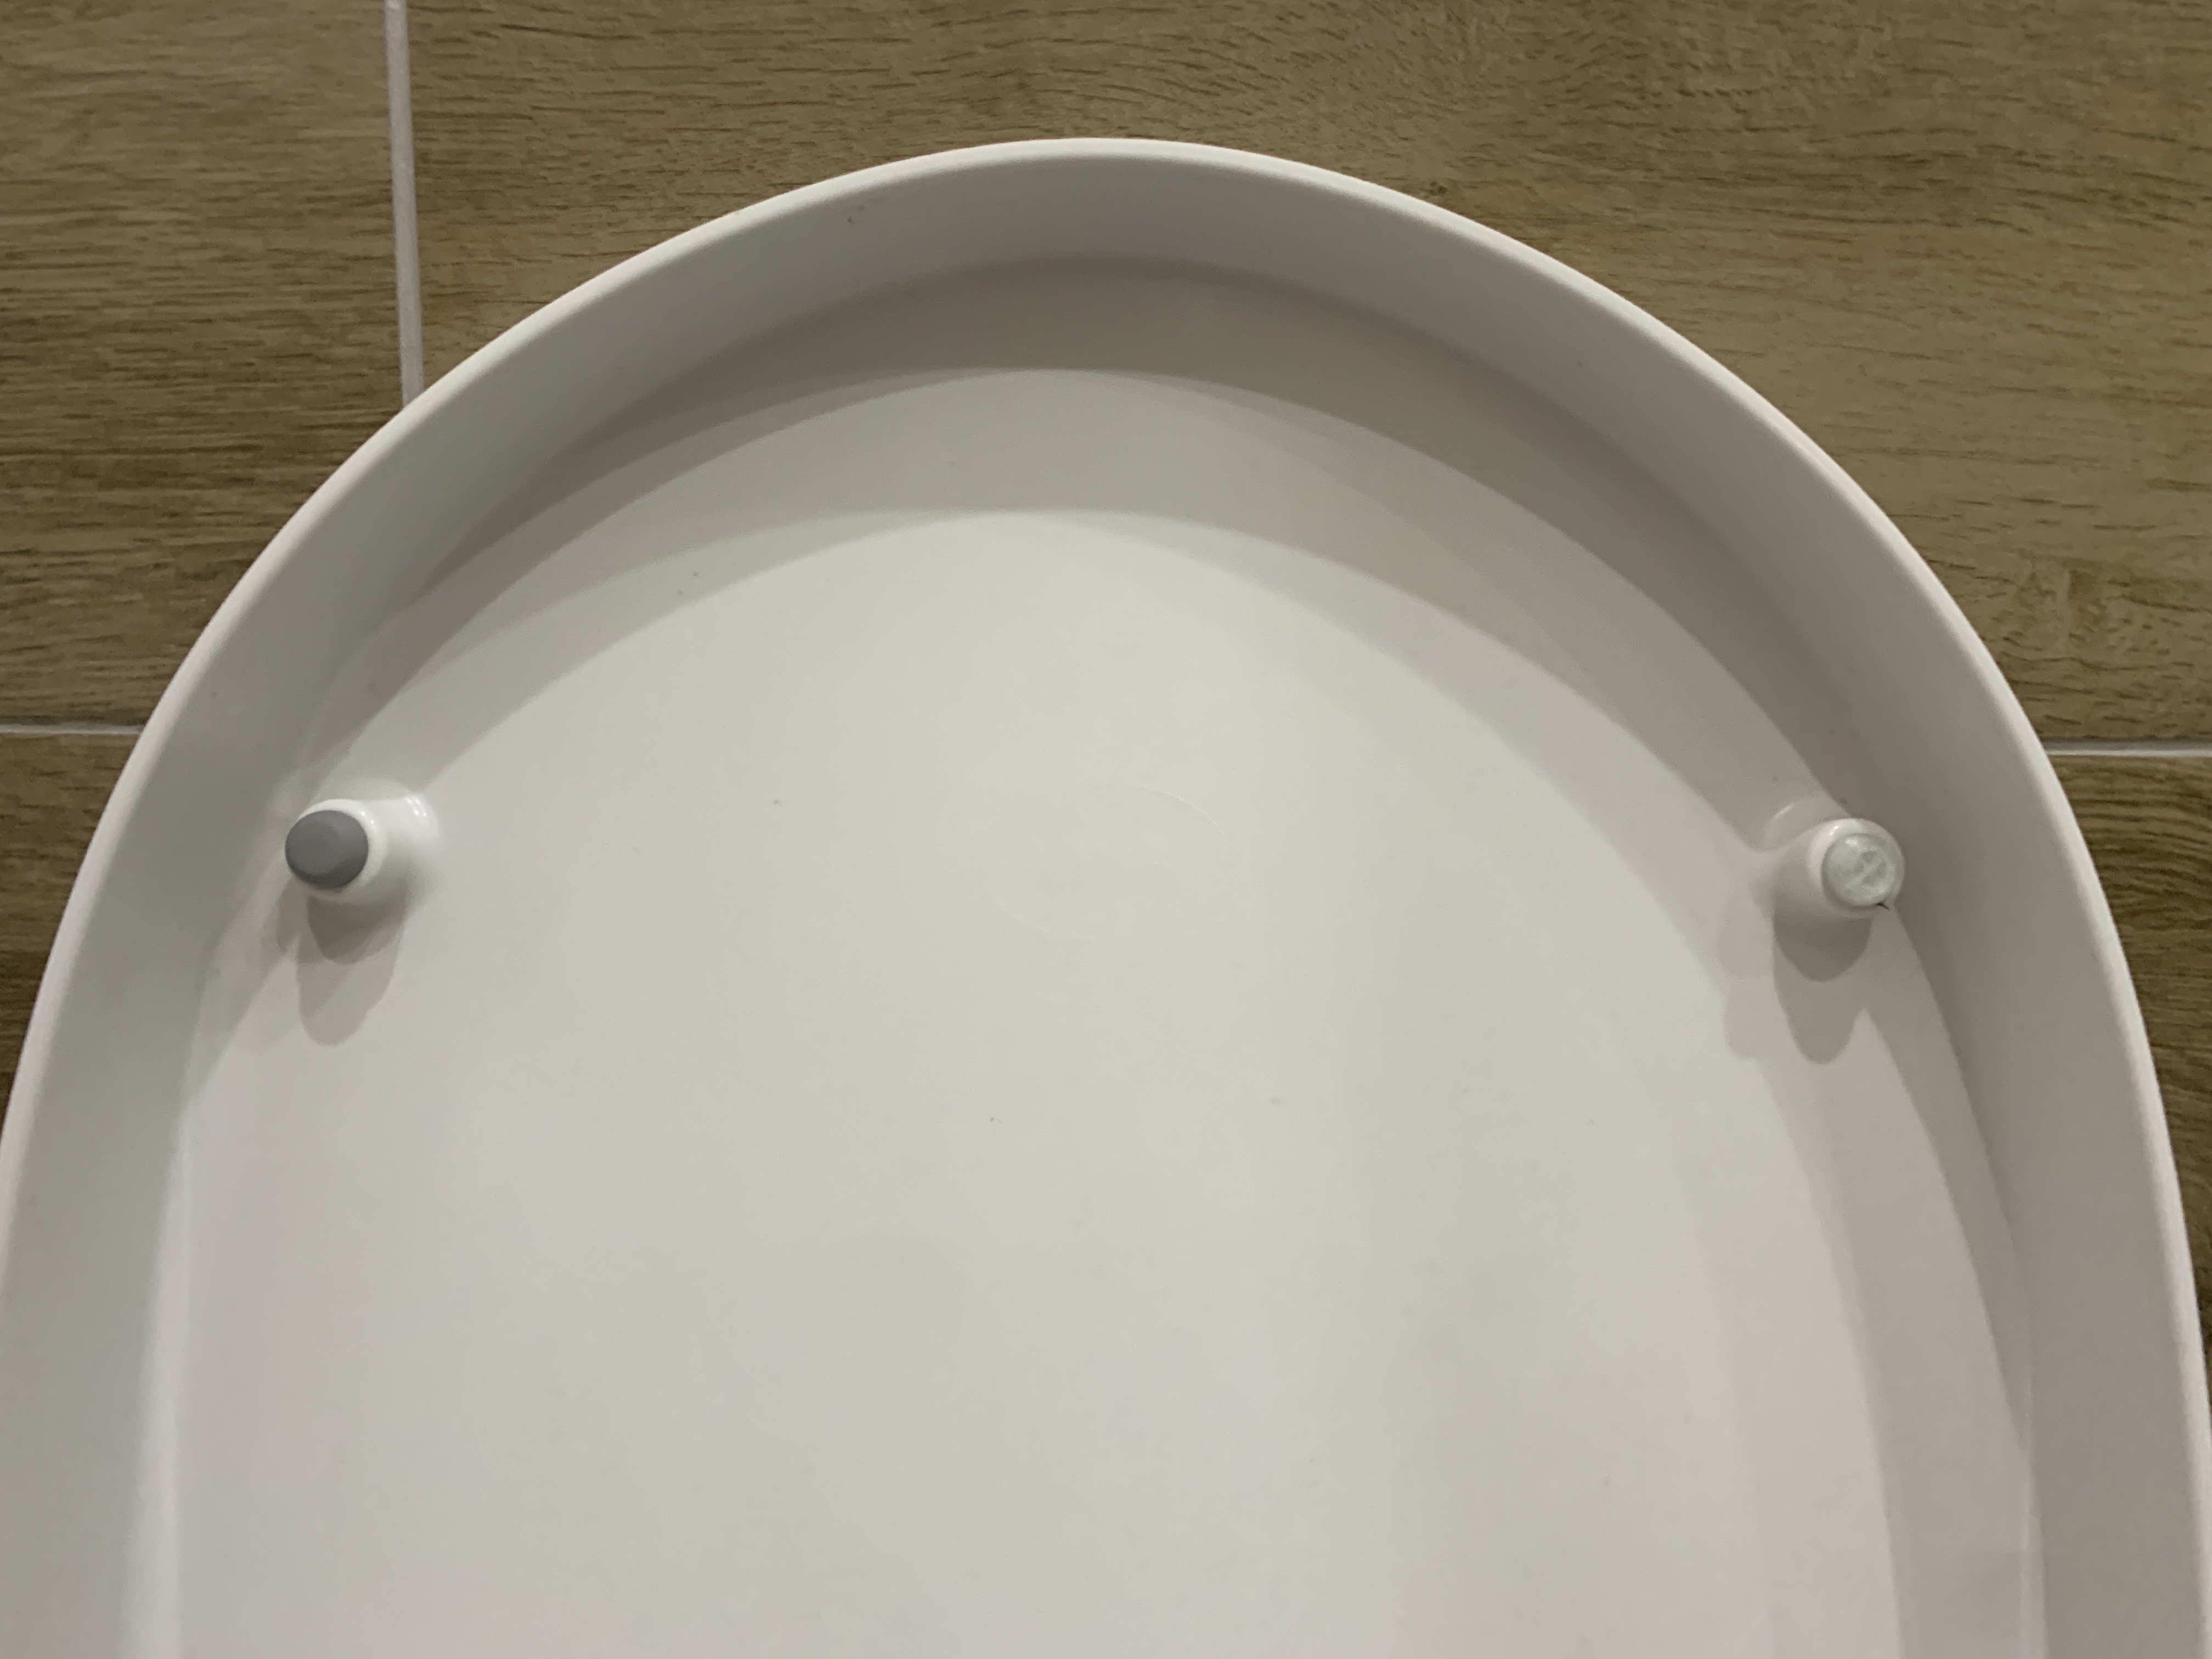 Toilet seat rubber bumper replacement by karelk | Download free STL ...